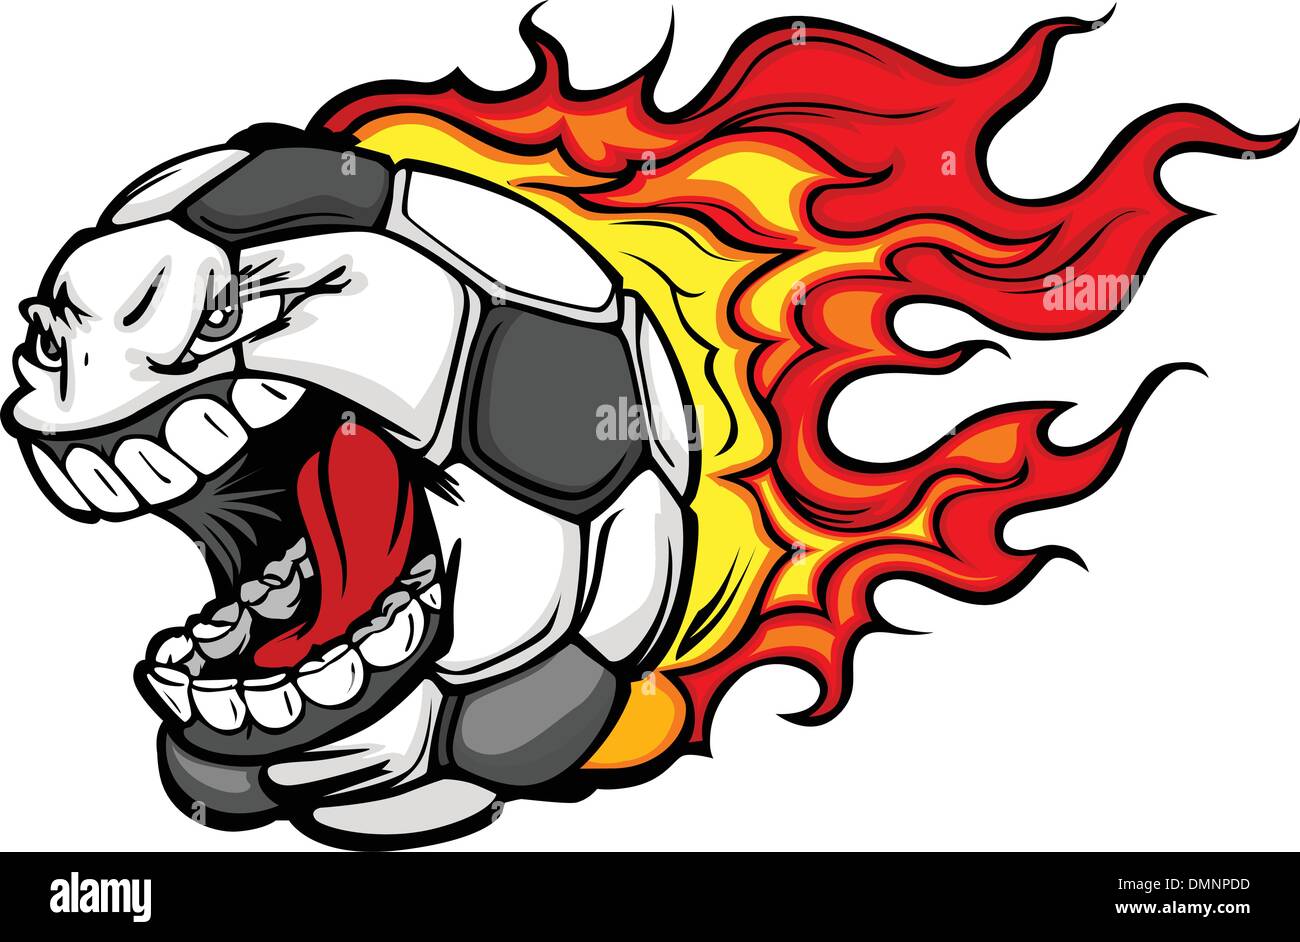 Flammenden Fußball schreien Gesicht Vector Cartoon Stock Vektor